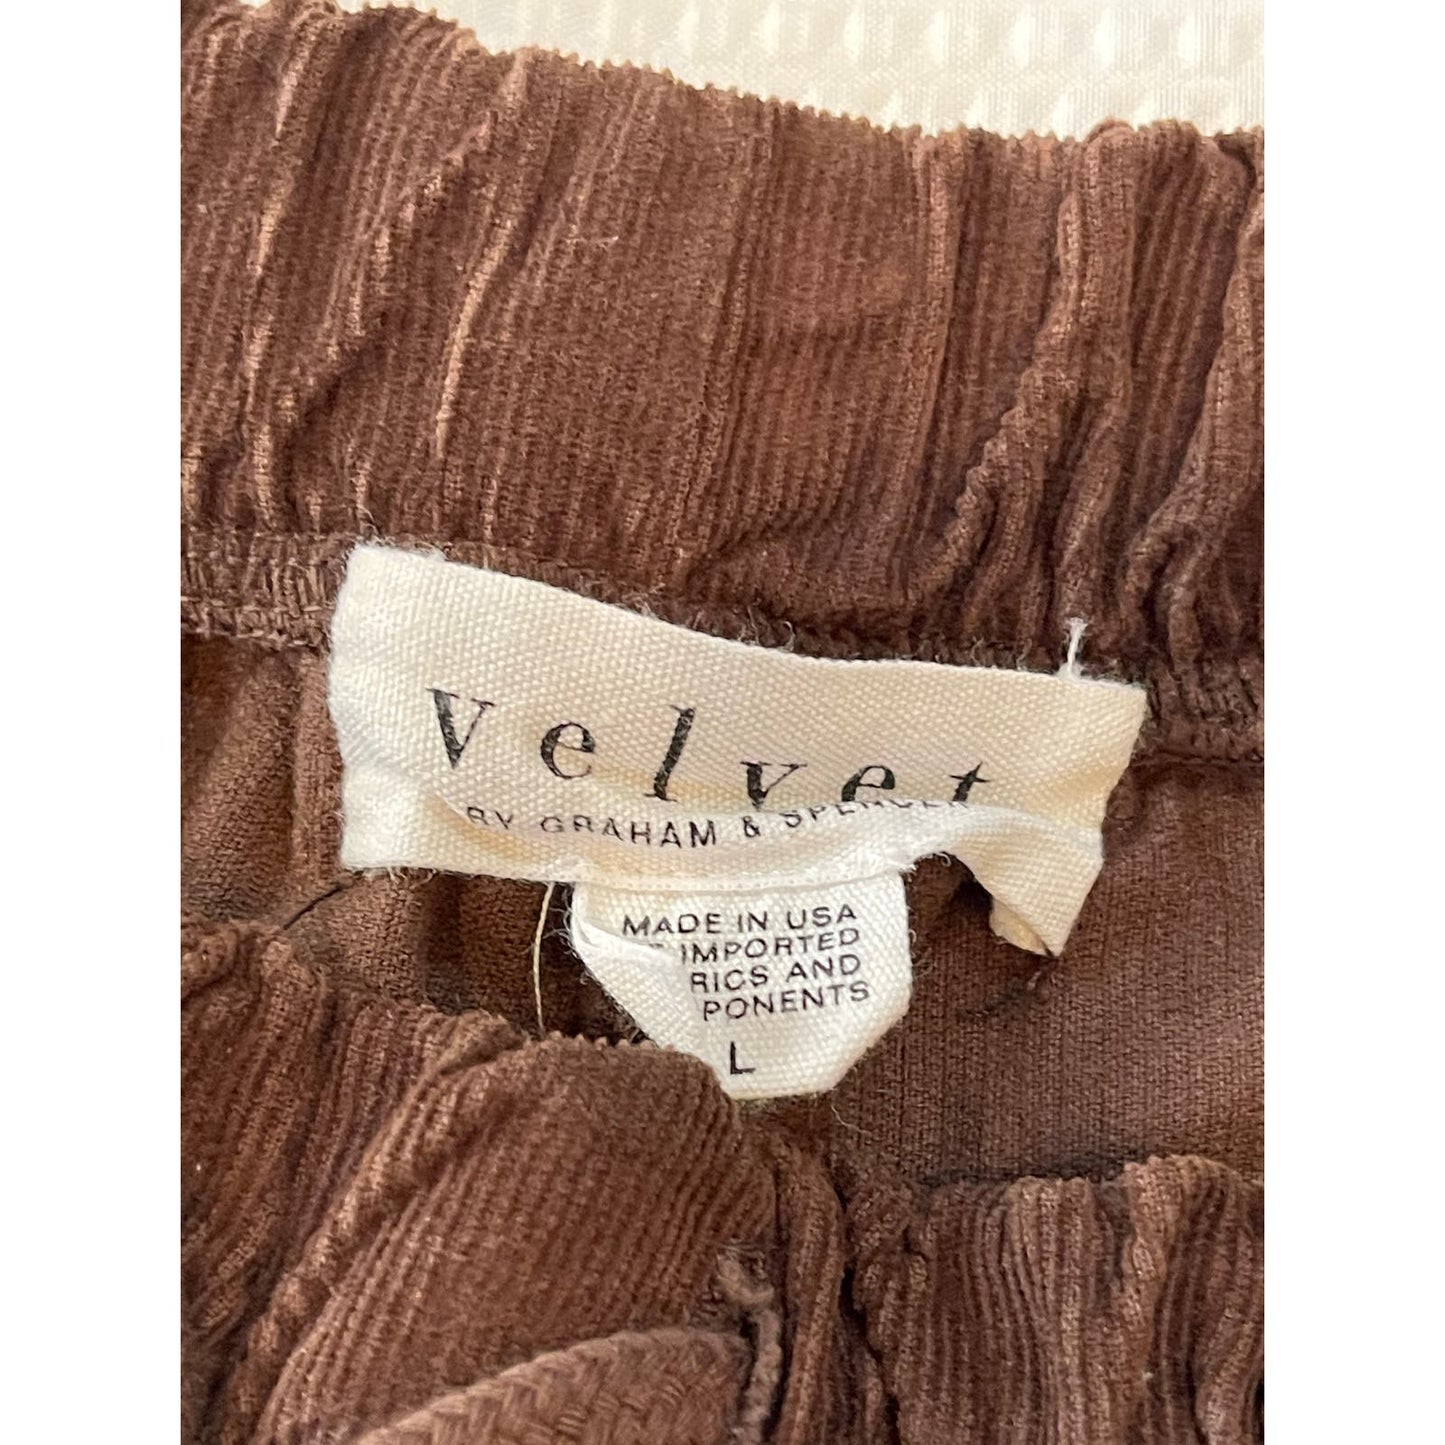 Velvet by Graham & Spencer Brown Corduroy Pants Women's Size Large